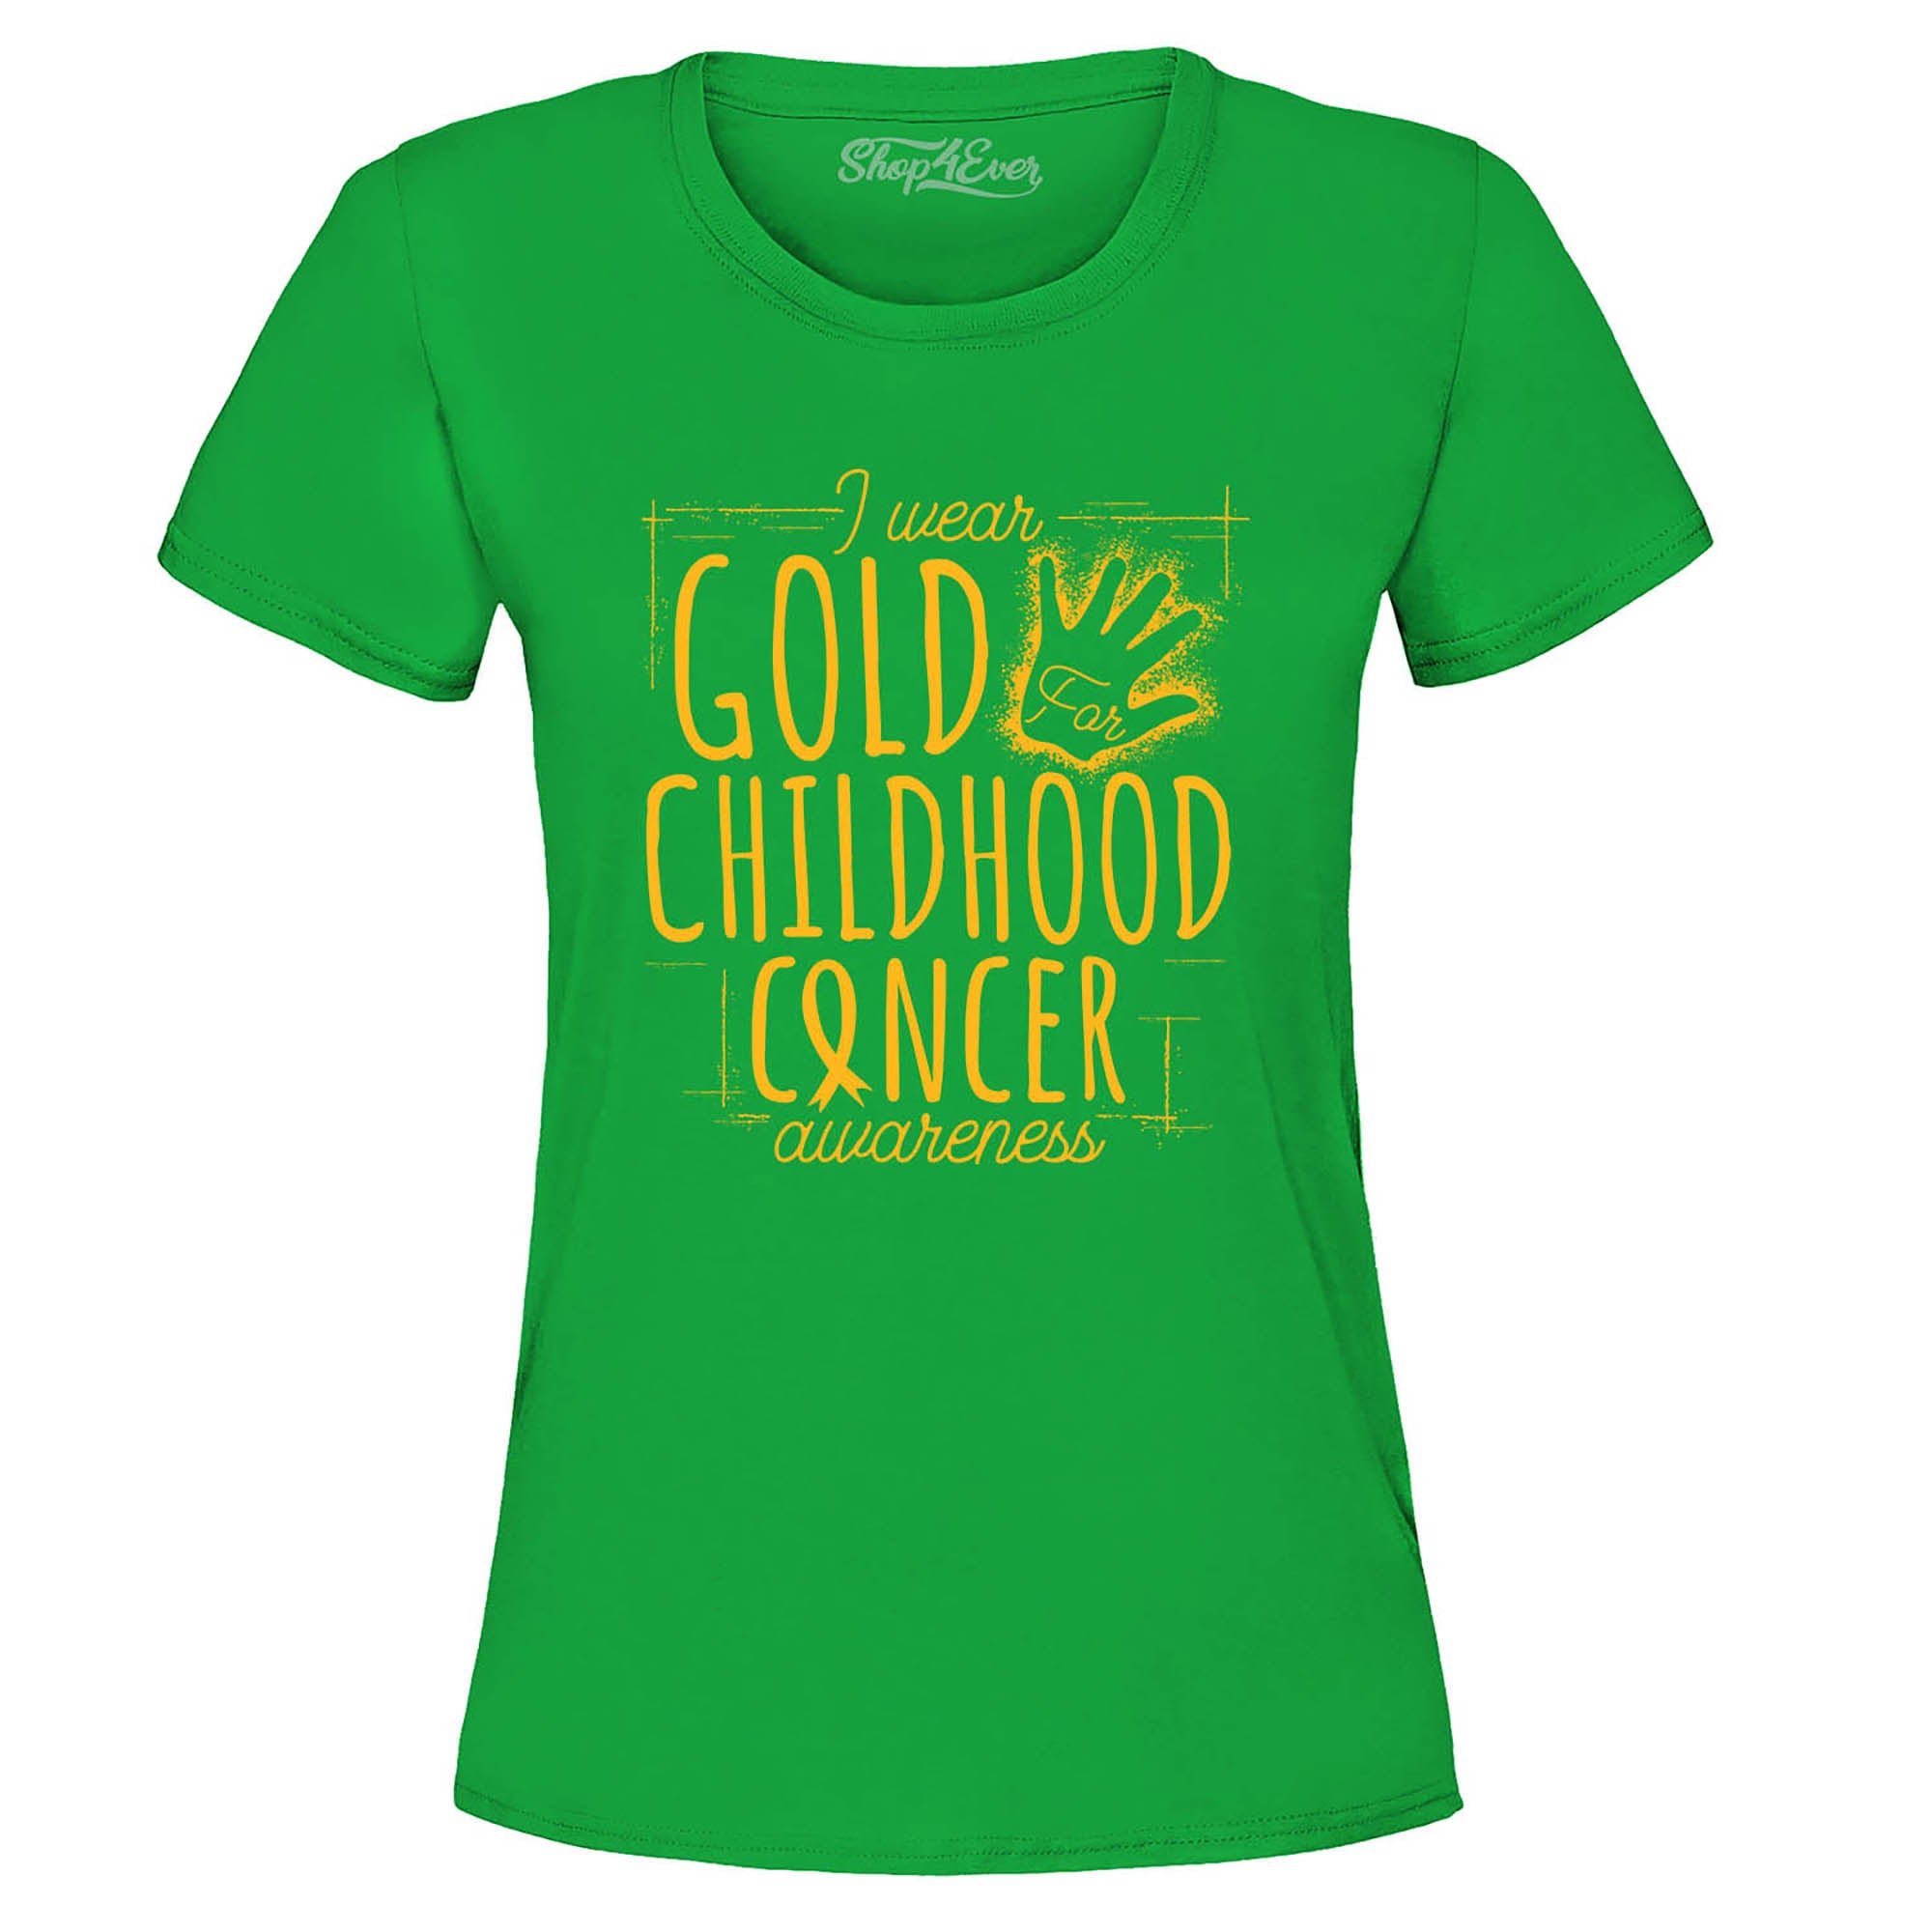 I Wear Gold for Childhood Cancer Awareness Women's T-Shirt